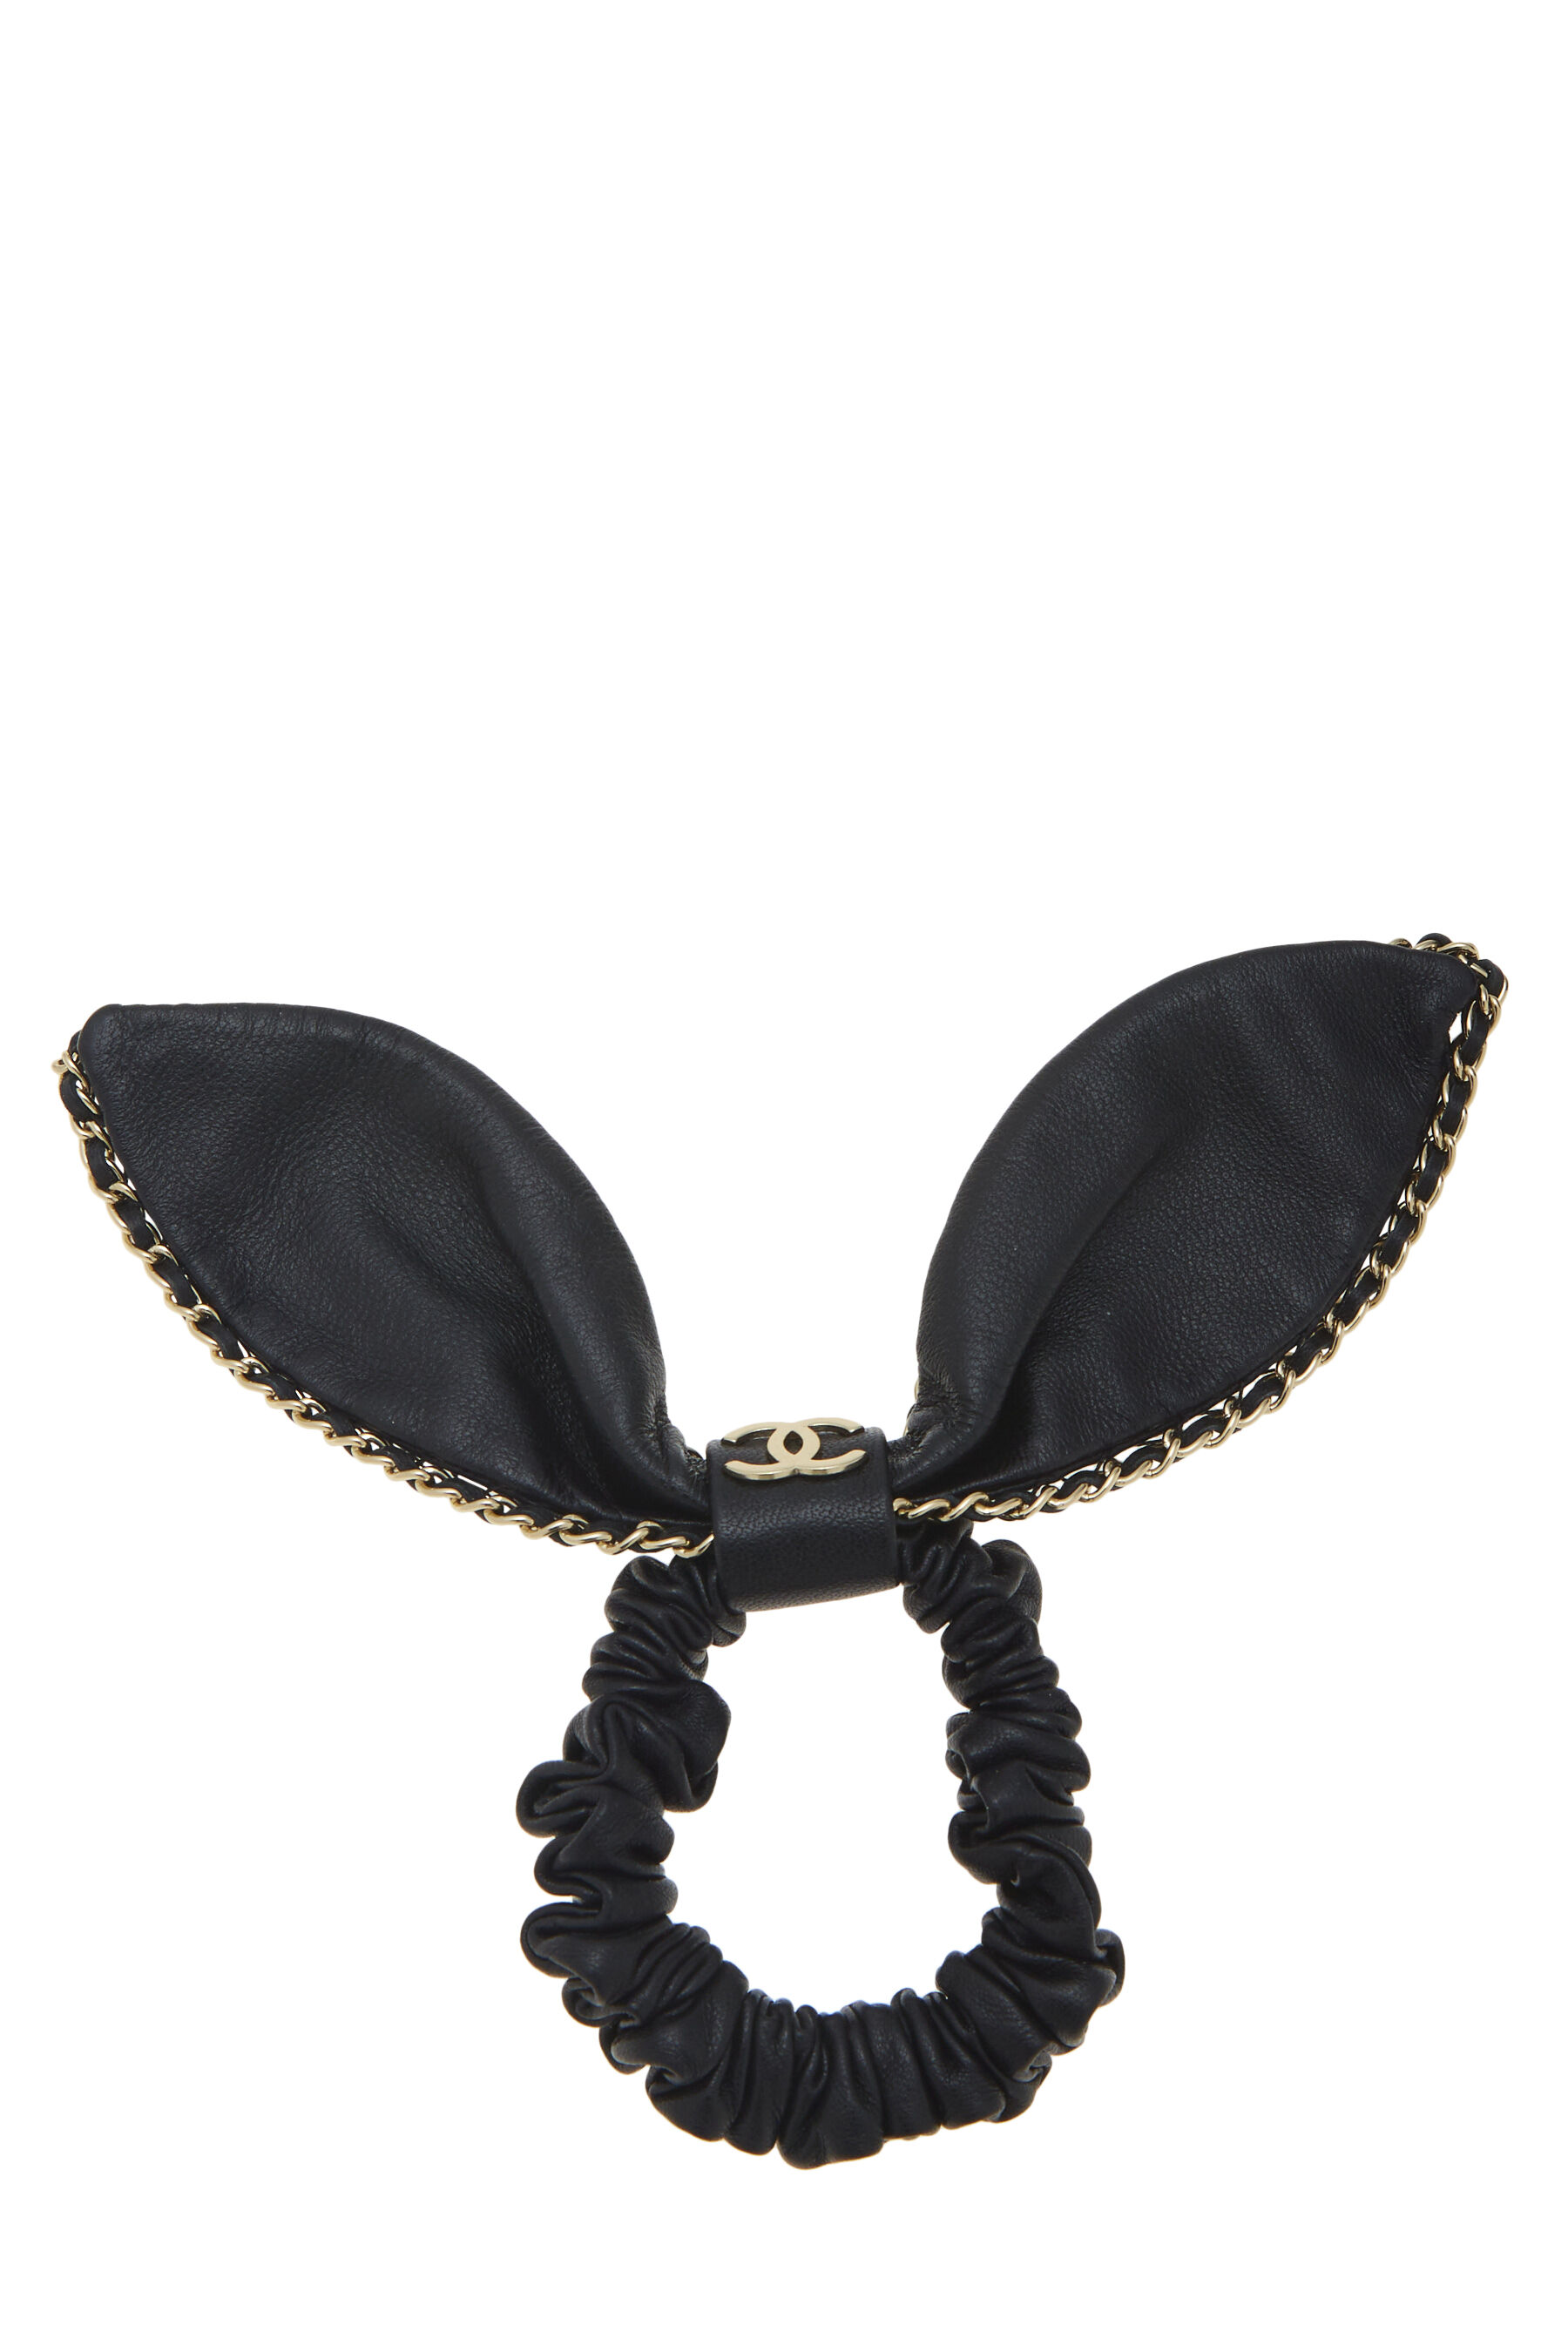 Chanel Black Lambskin & Gold Chain Hair Bow Tie